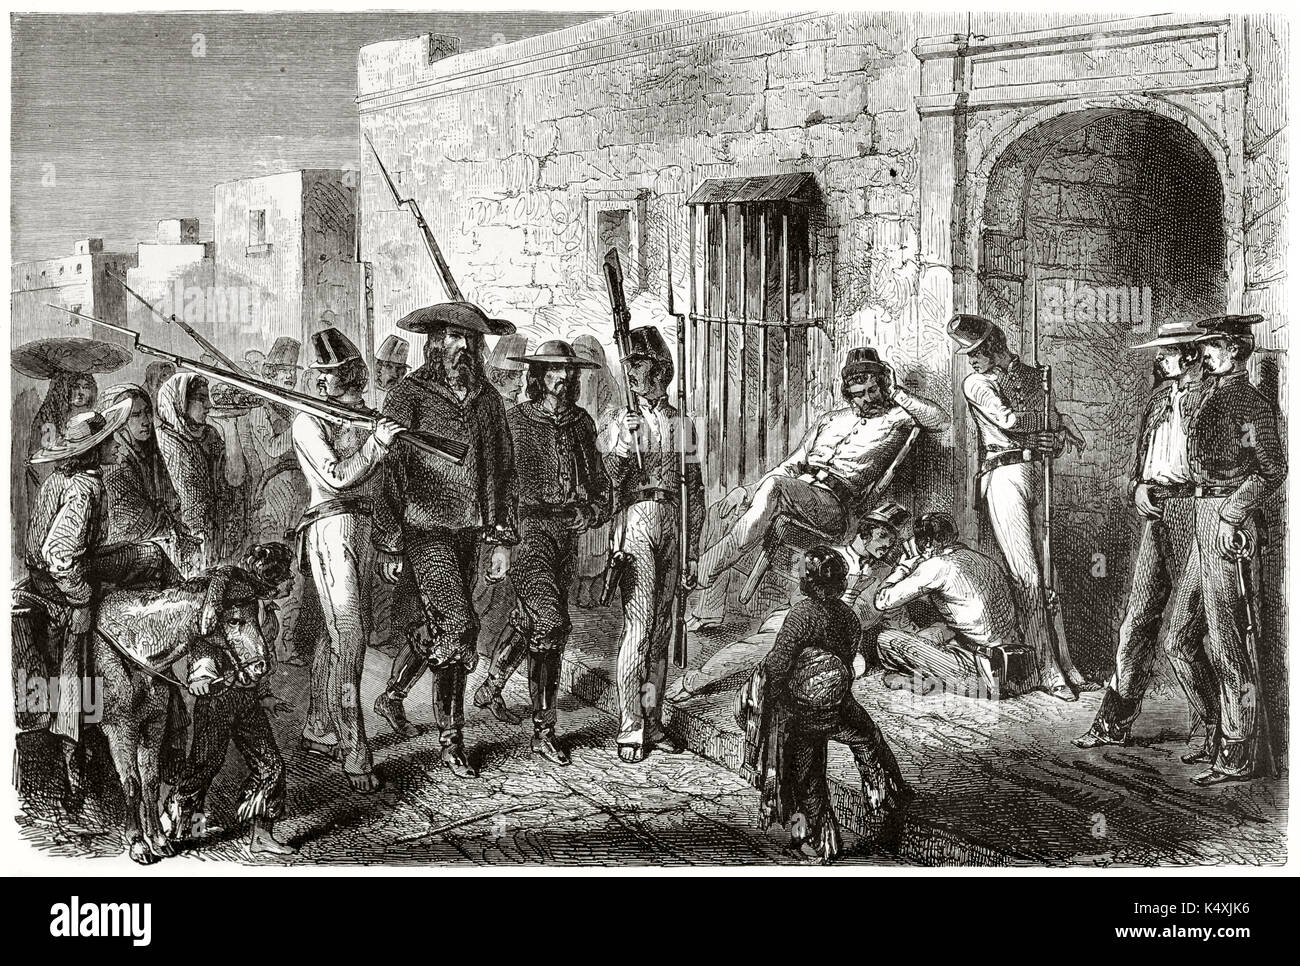 Ancient prisoner taken to jail by guards. Ernest Vigneaux capture in Mexico. Created by Riou and Pouget published on Le Tour du Monde Paris 1862 Stock Photo